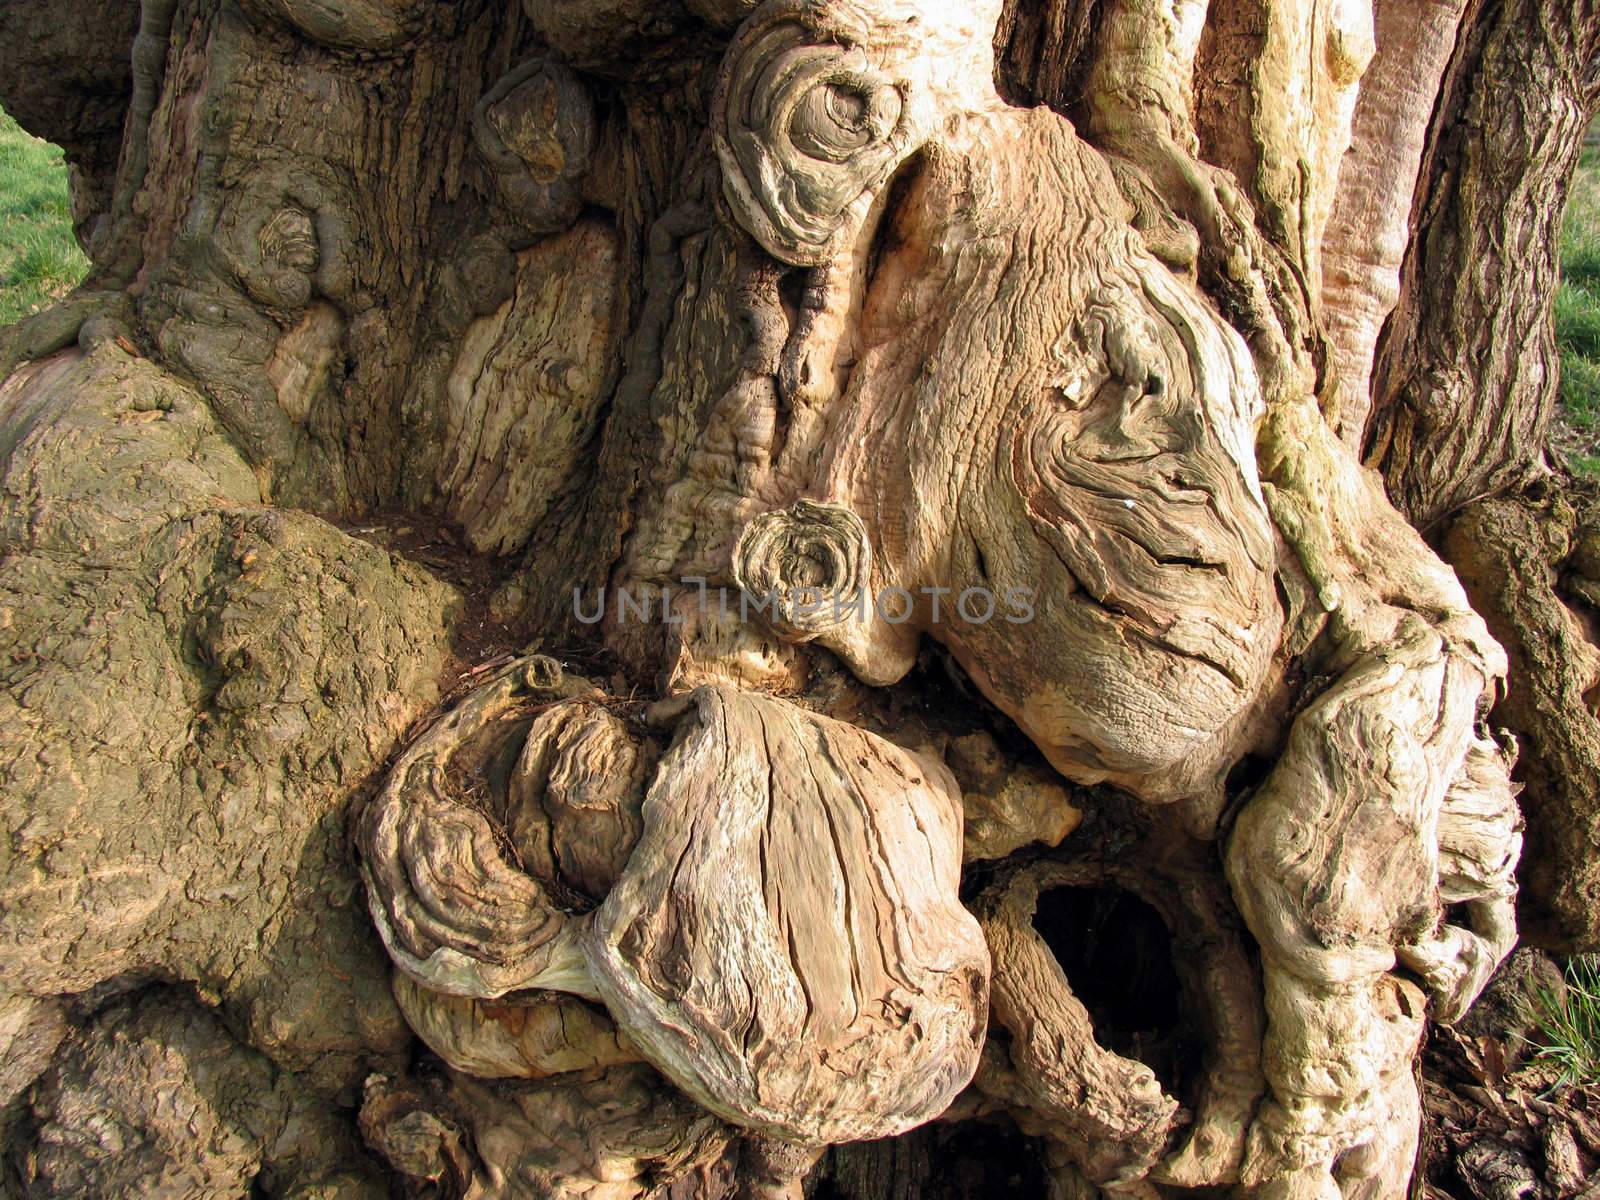 Strange shapes formed in tree bark